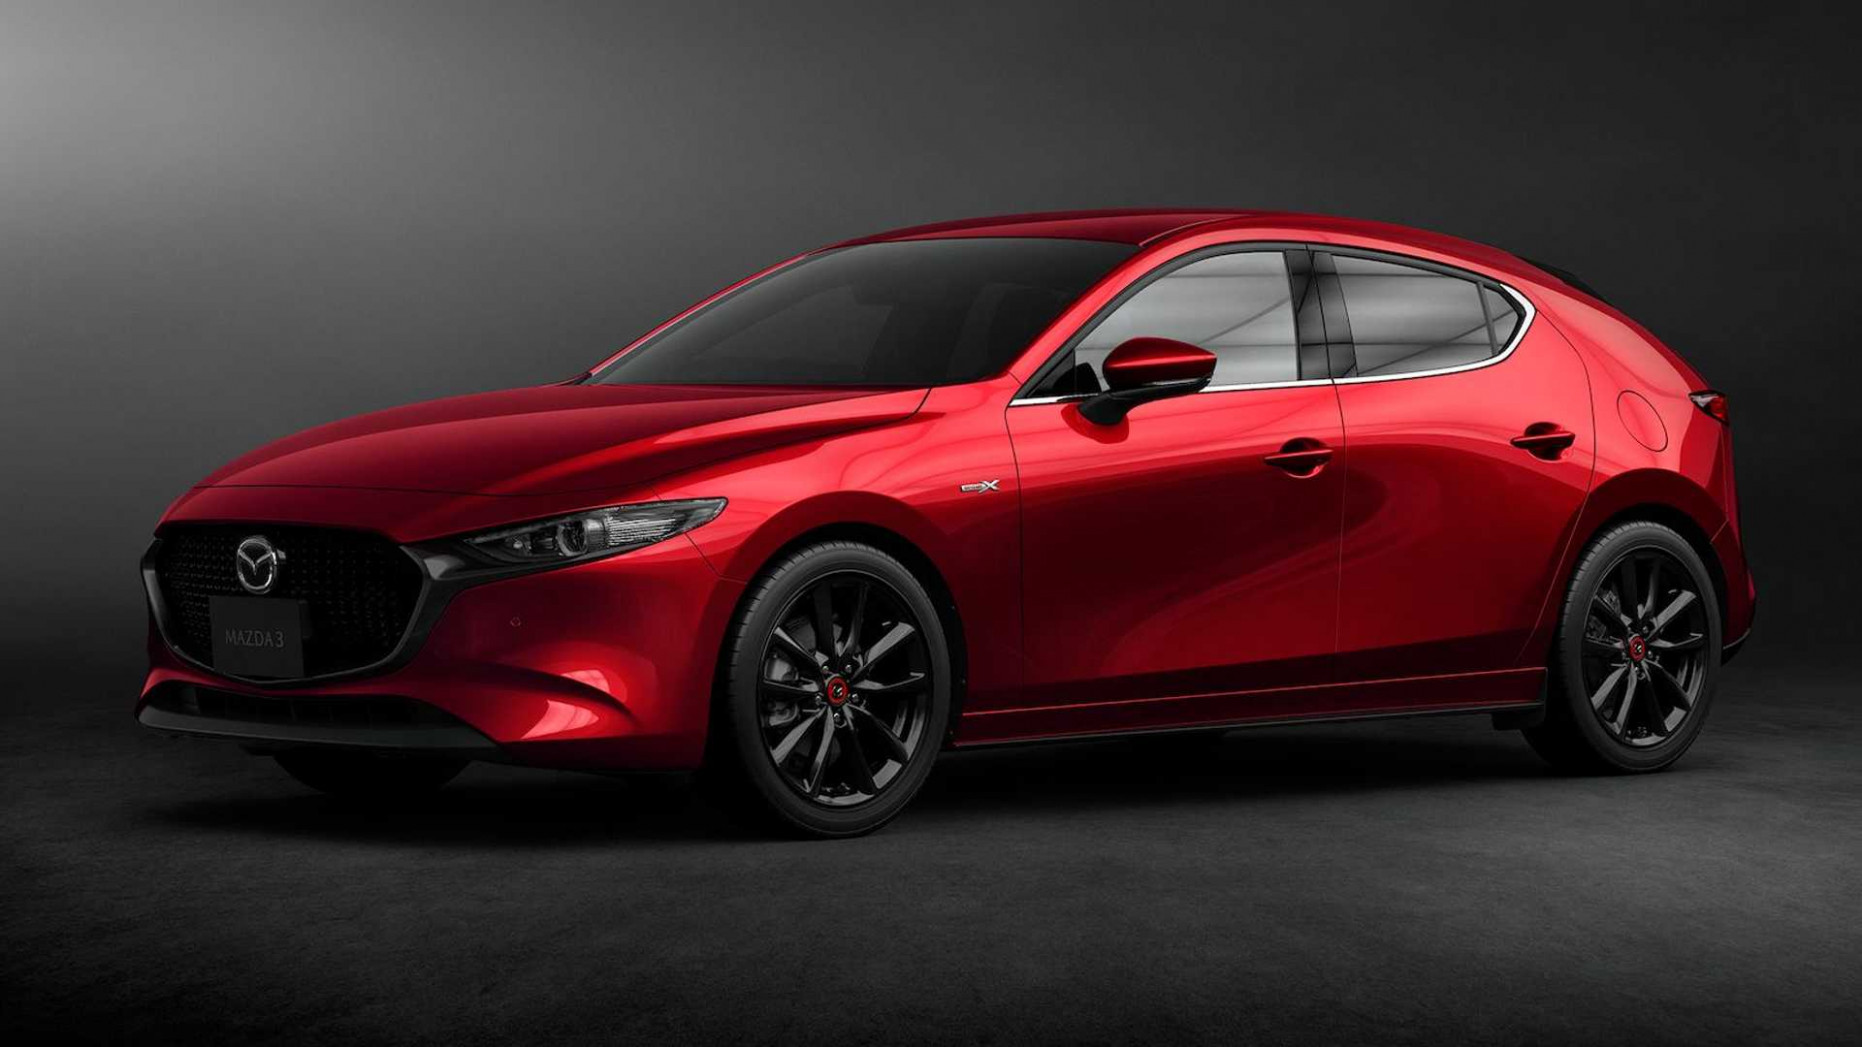 New Concept 2022 Mazda 3 Update